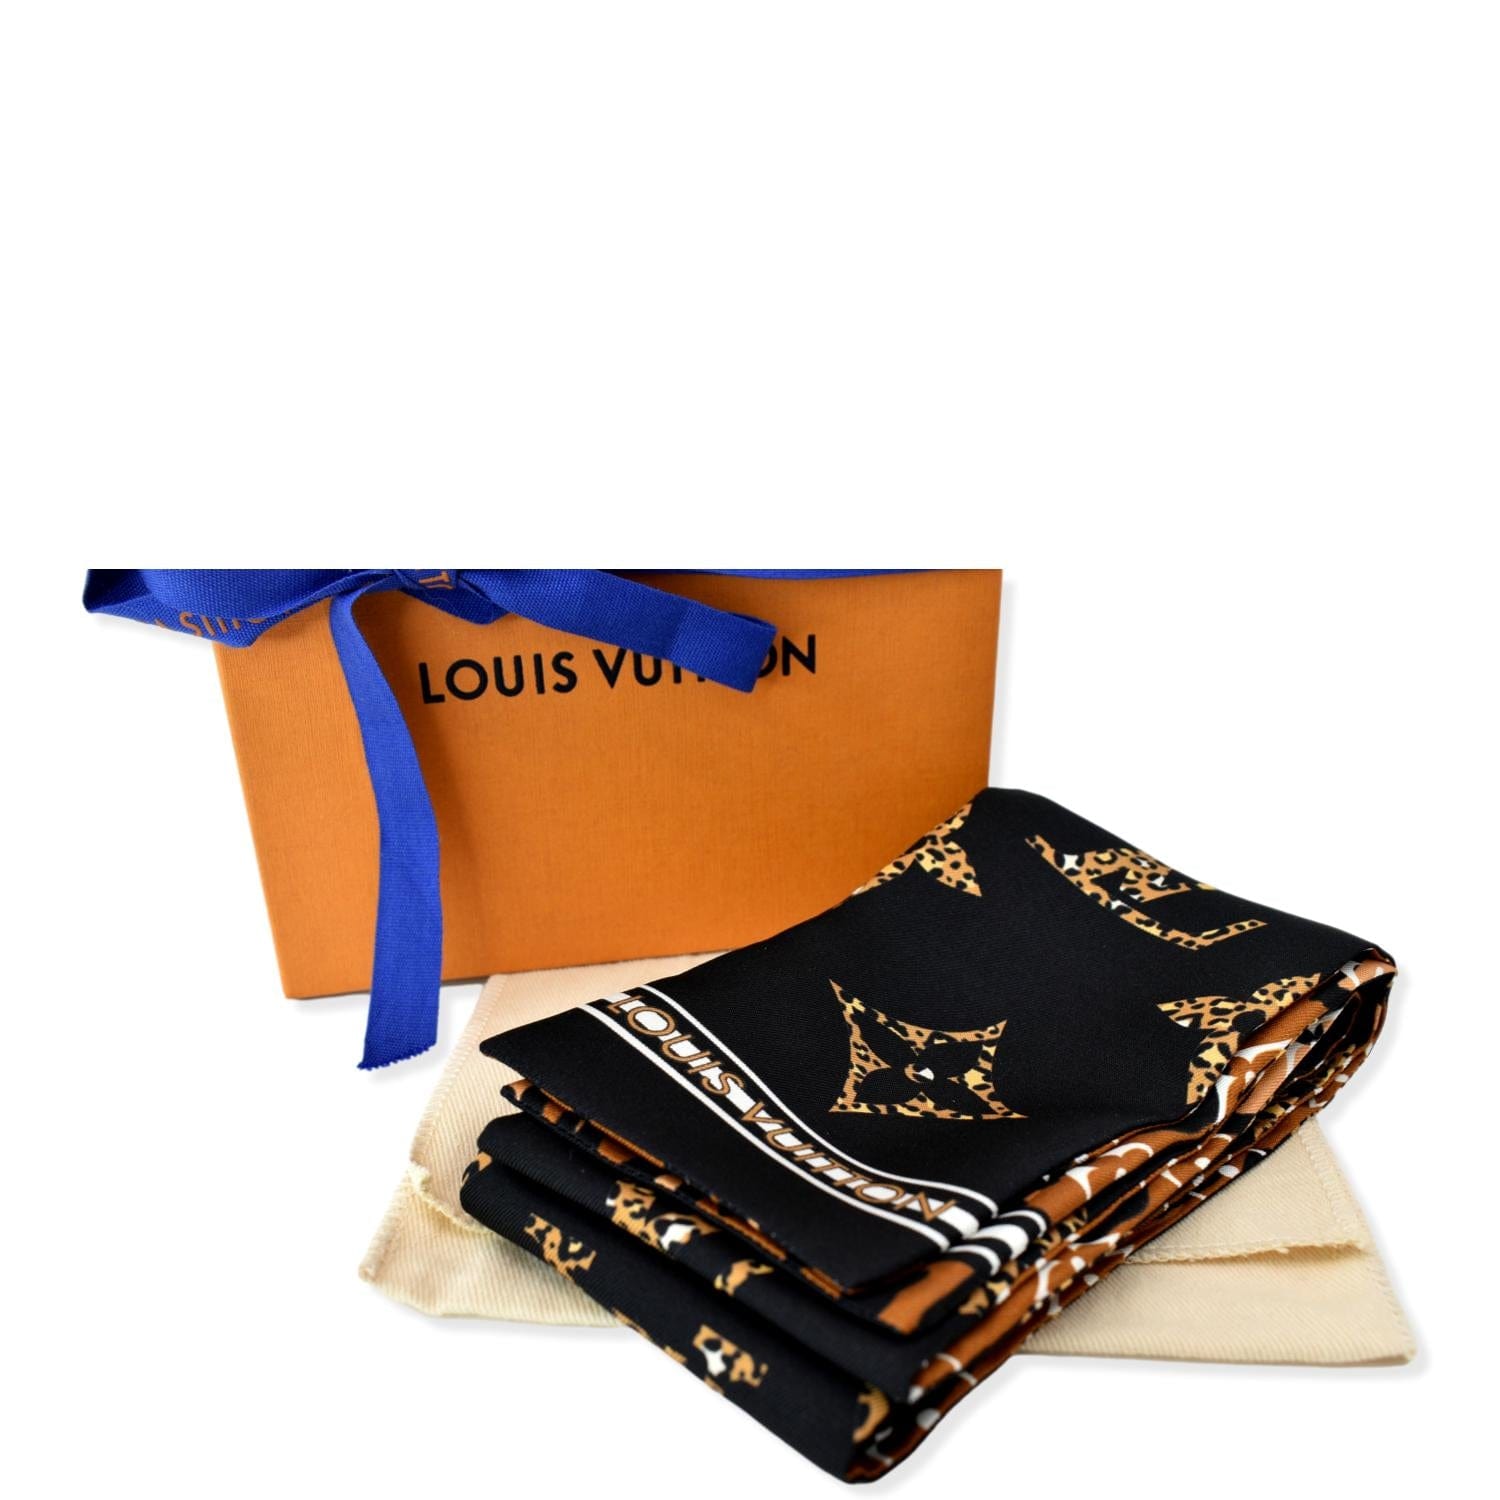 Brand Gifts on X: Louis Vuitton 🖤 3100 :SR